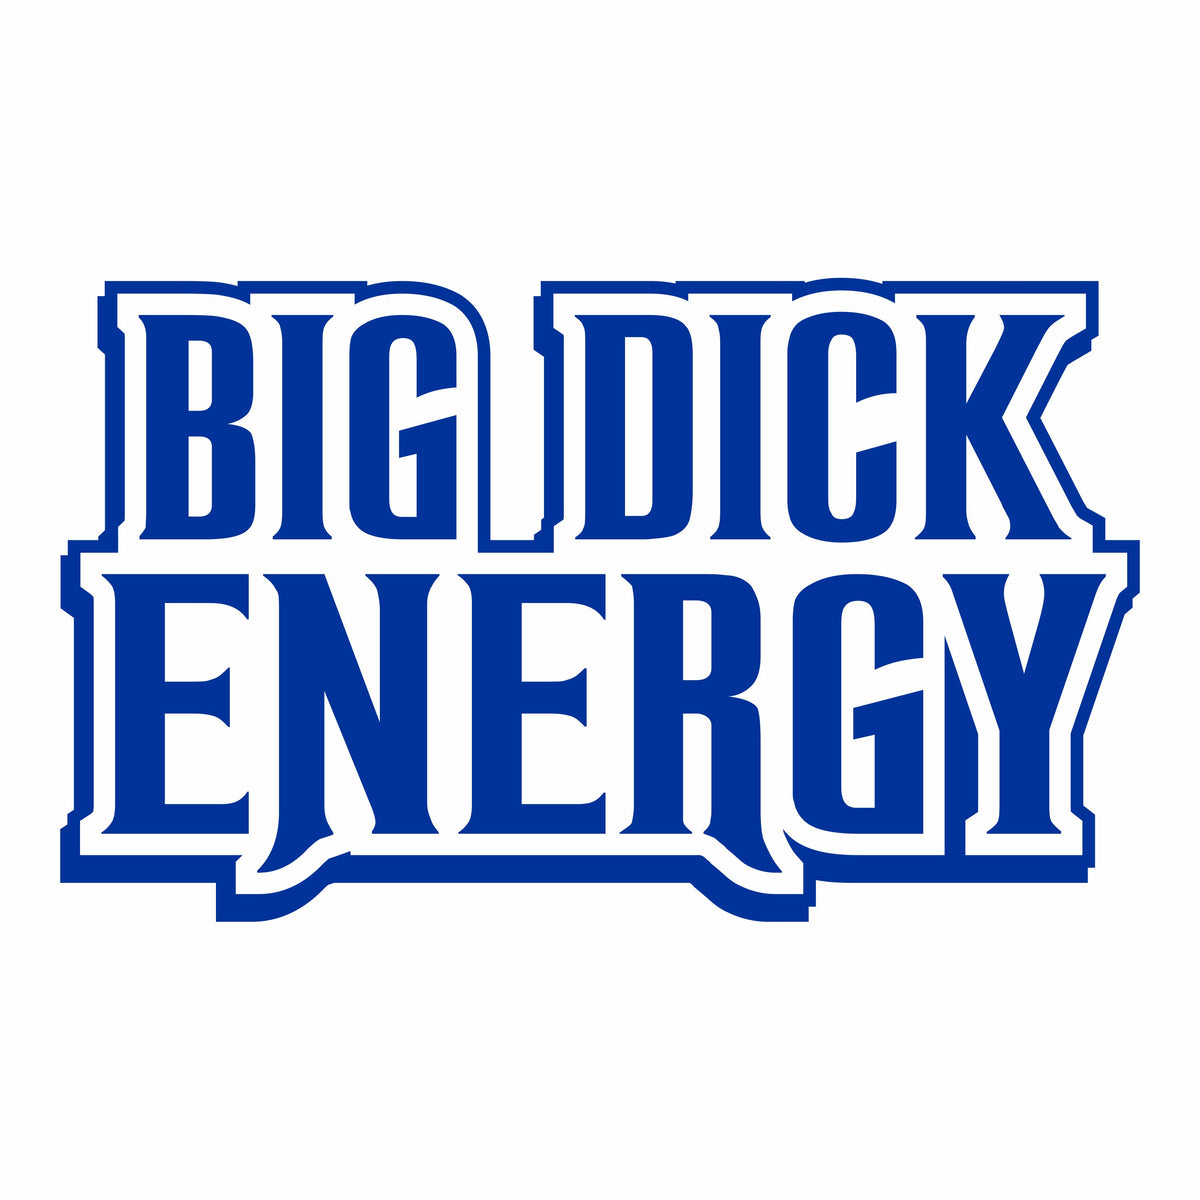 Big Dick Energy - Vinyl Decal - Free Shipping